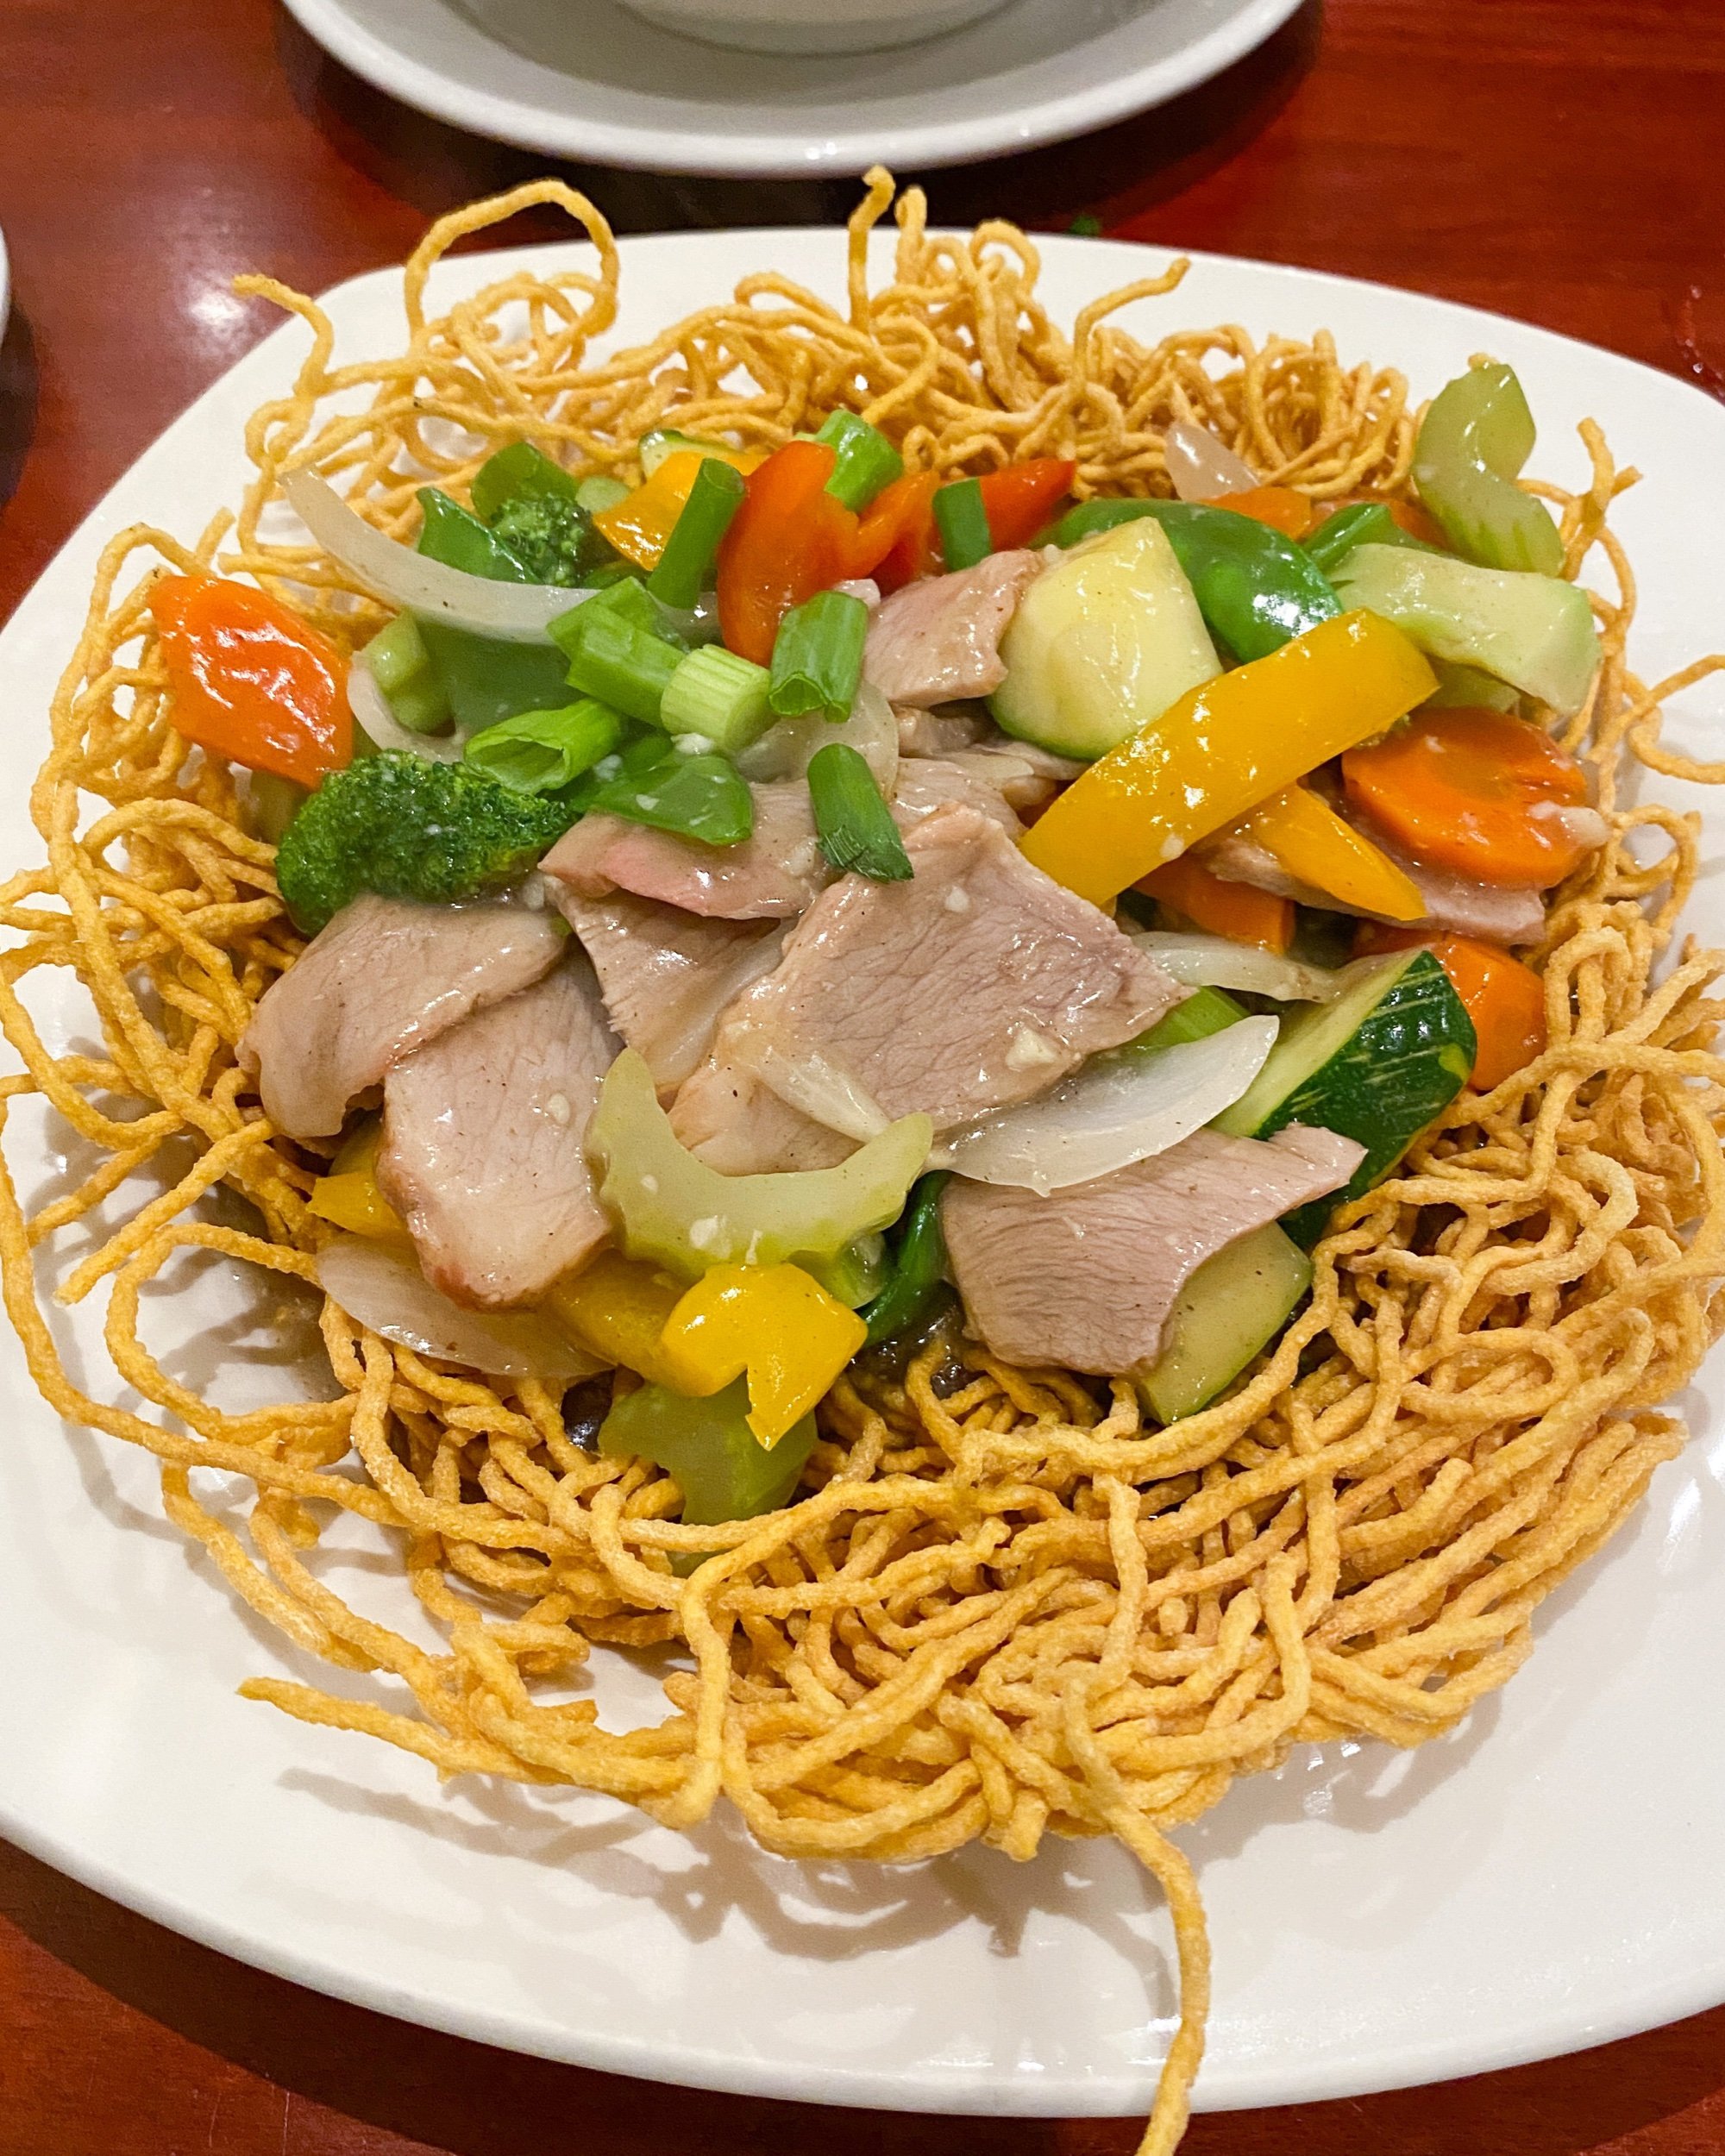 Noodle Saigon - Mi Xao Don (Crispy Egg Noodles)